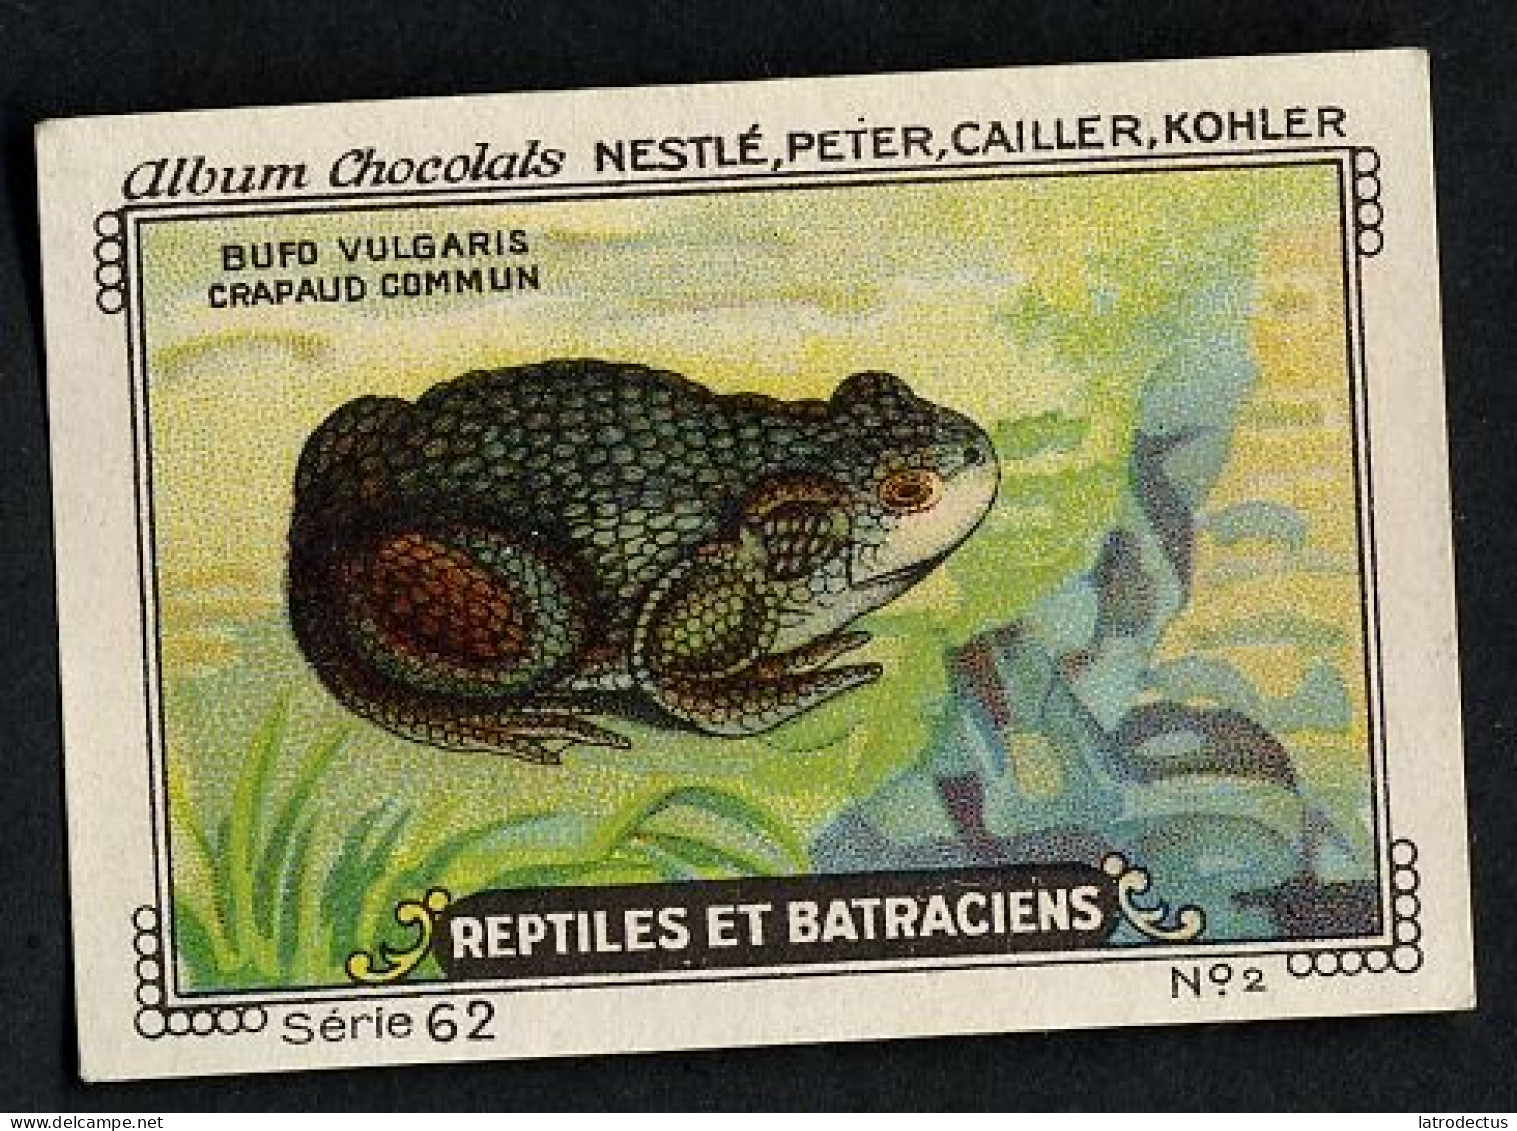 Nestlé - 62 - Reptiles Et Batraciens, Reptiles And Amphibians - 2 - Bufo Vulgaris, European Toad, Crapaud Commun - Nestlé